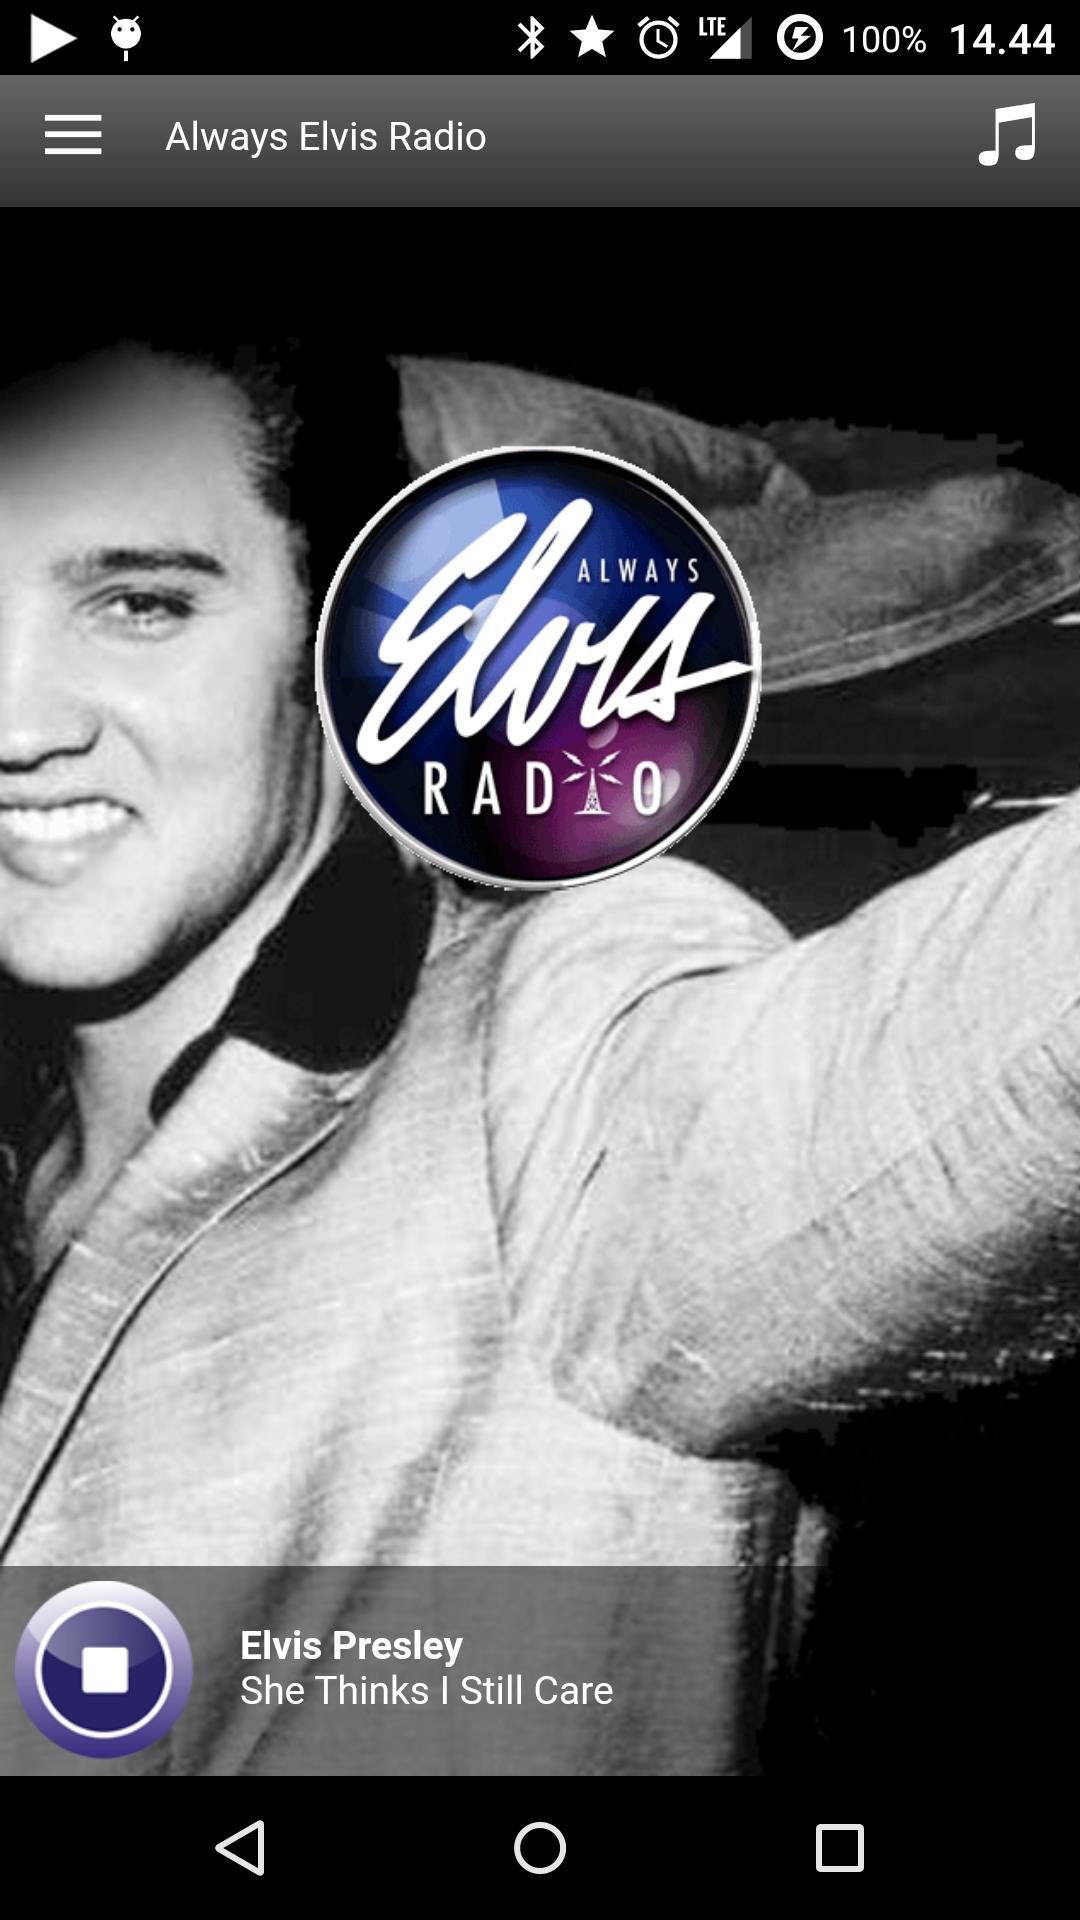 Always Elvis Radio for Android - APK Download